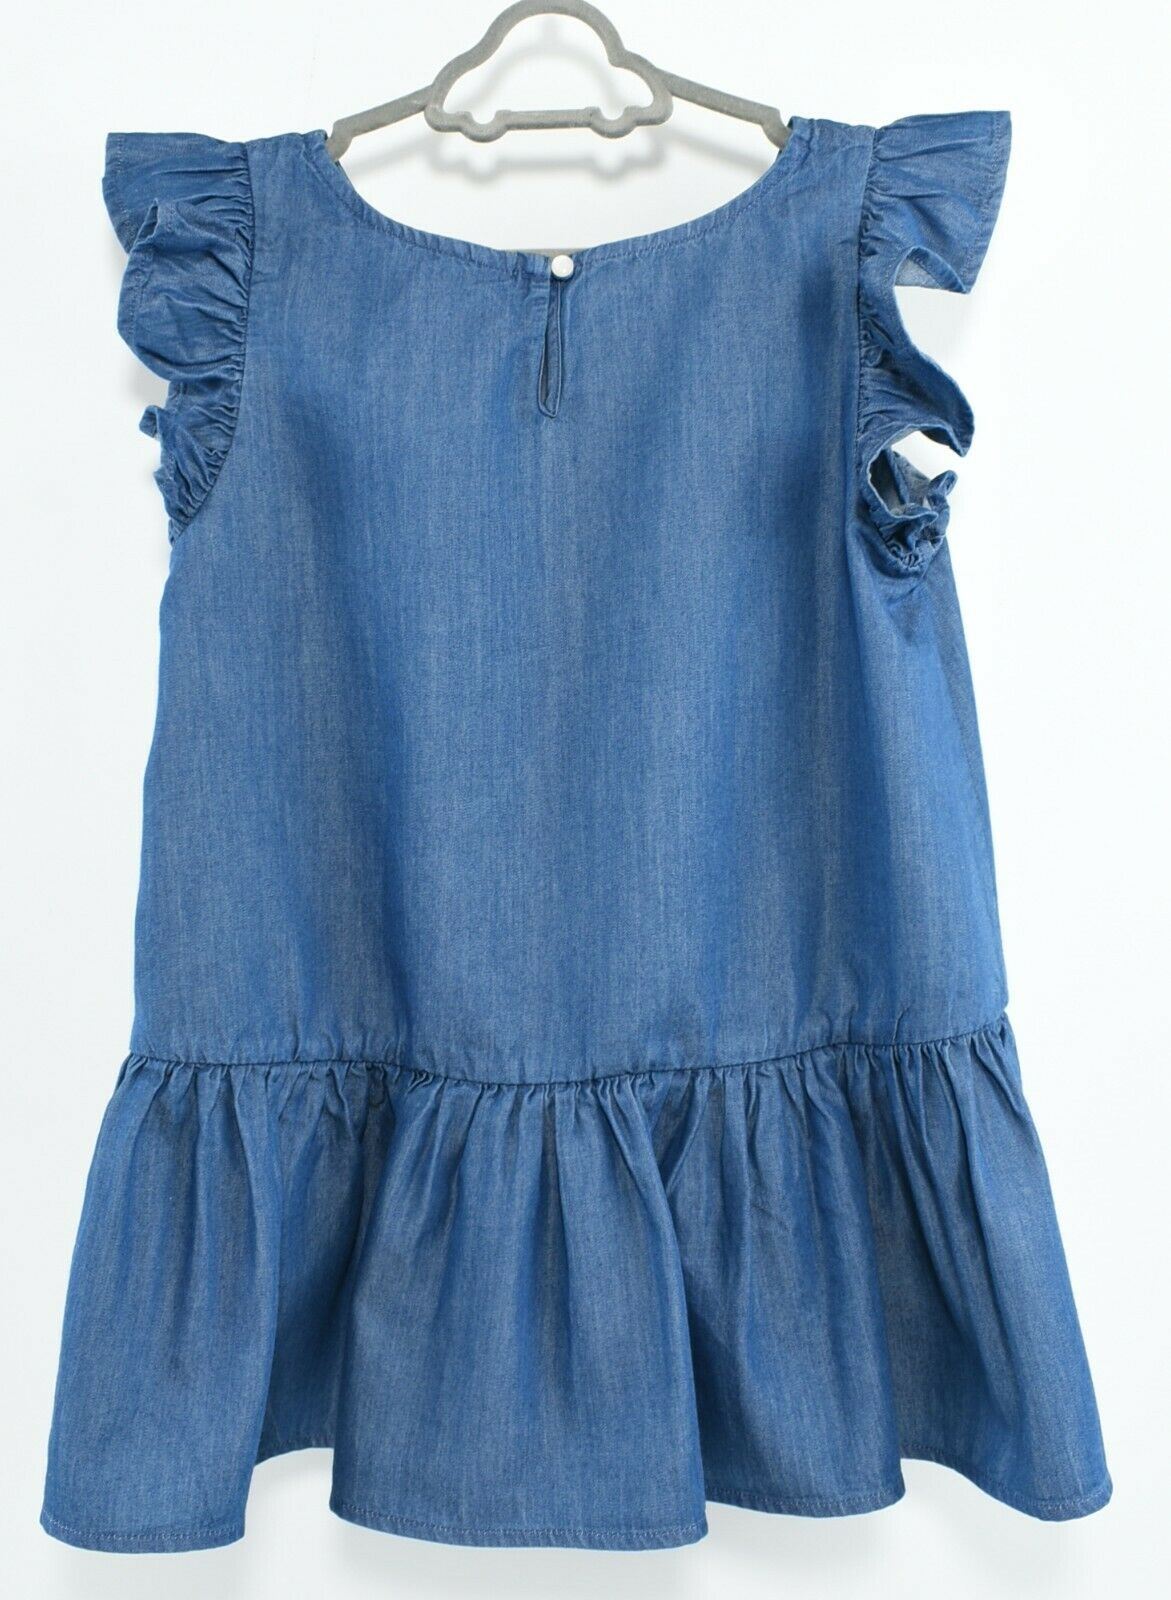 POLO RALPH LAUREN Girls' Blue Chambray Top, Cotton/Tencel, size 12 years